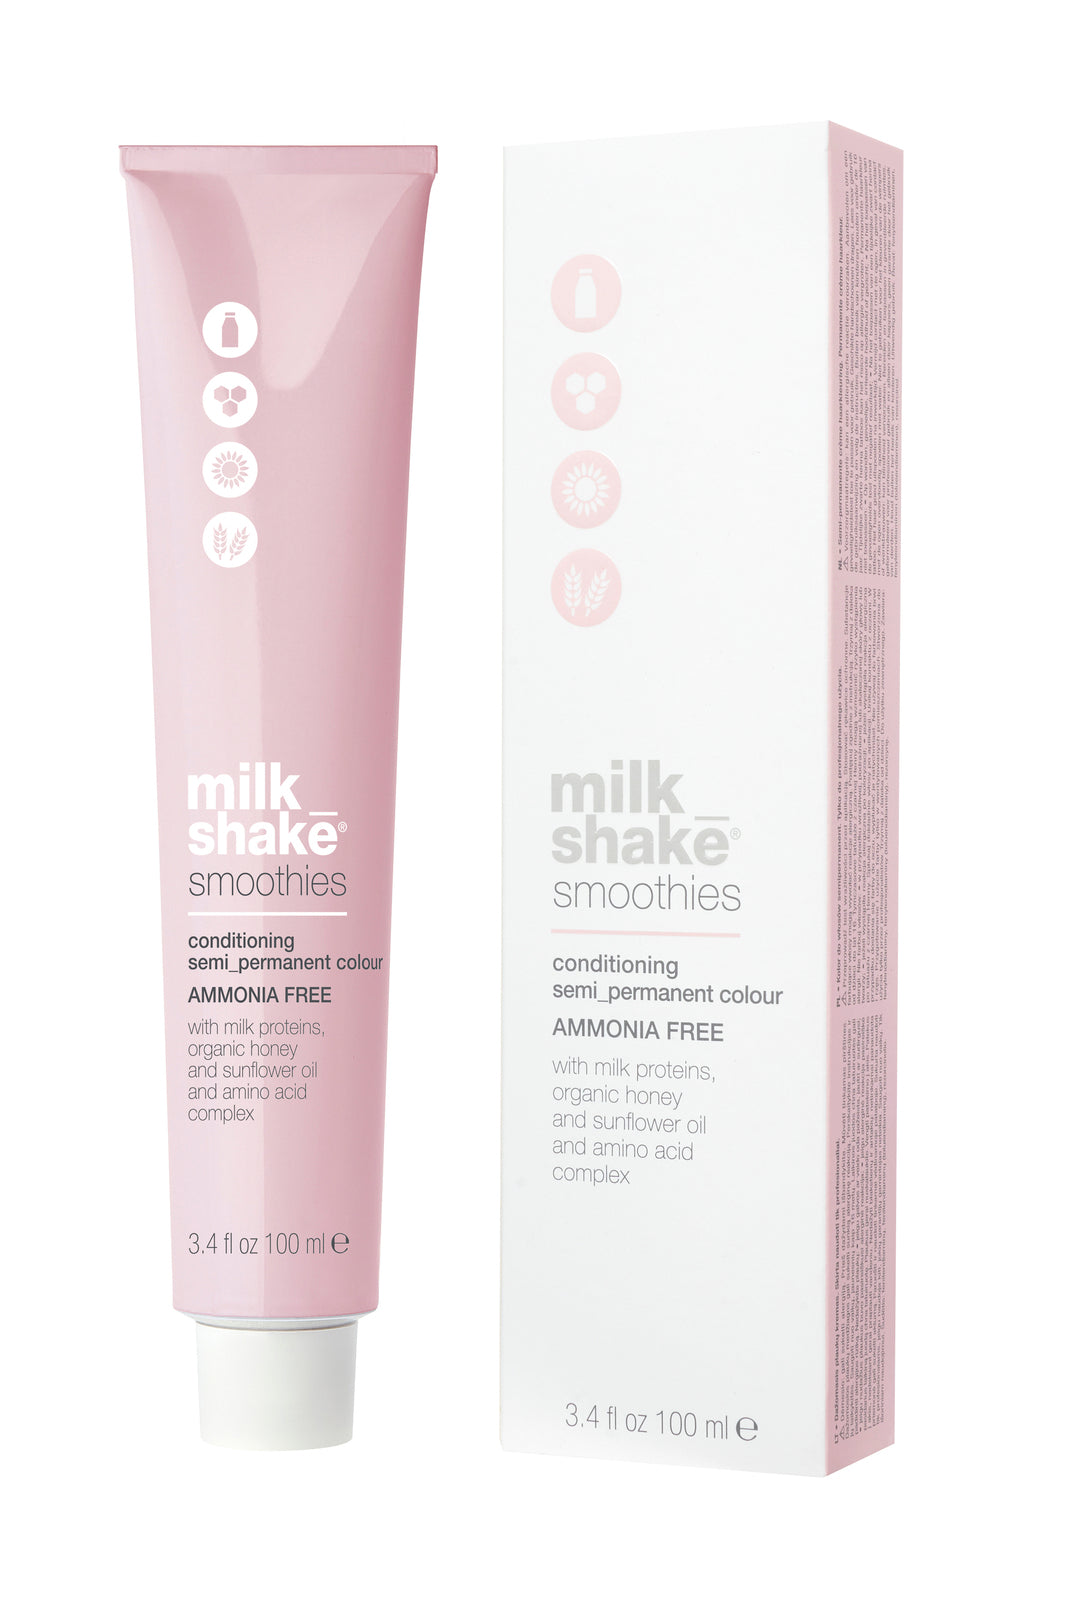 Milkshake smoothies semi-permanent color YELLOW